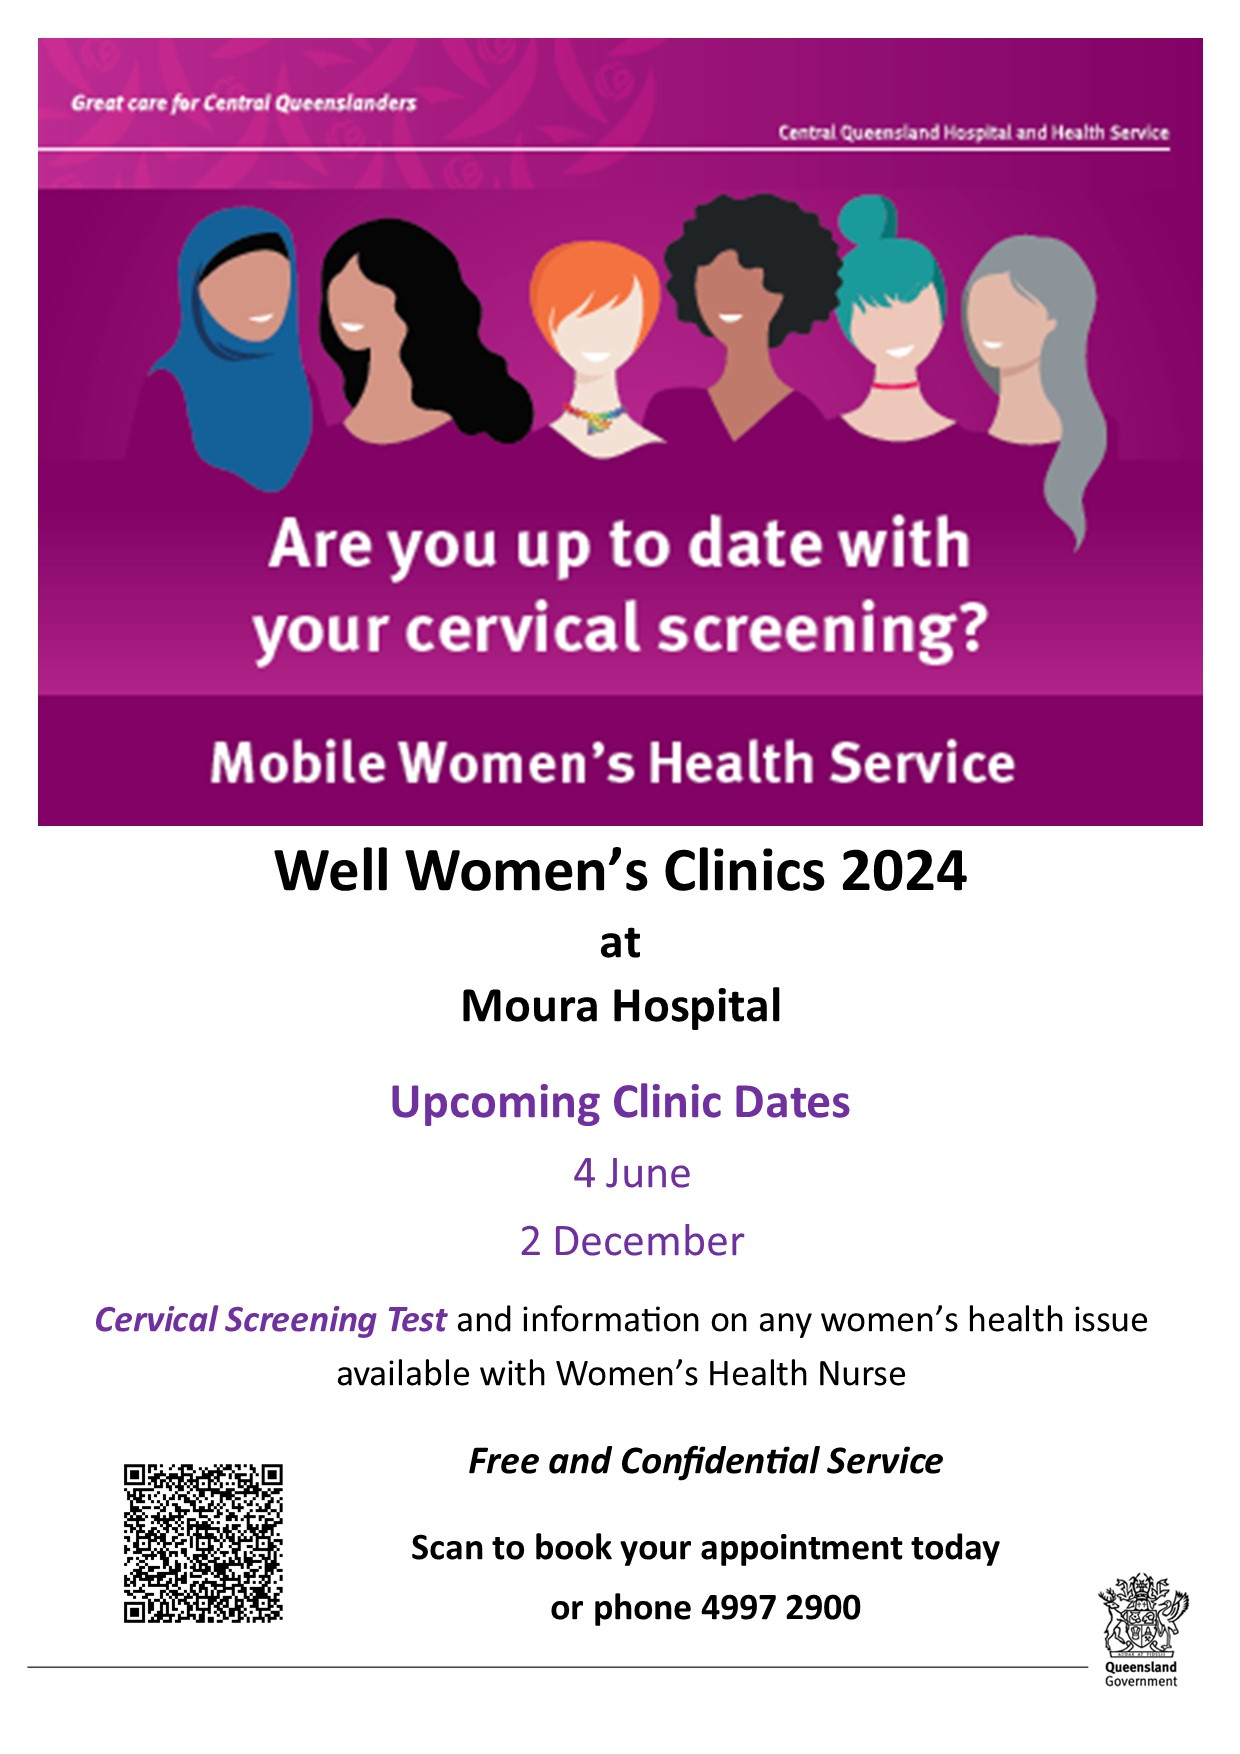 Mobile Women's Health Service - Well Women's Clinics 2024 - Moura Hospital